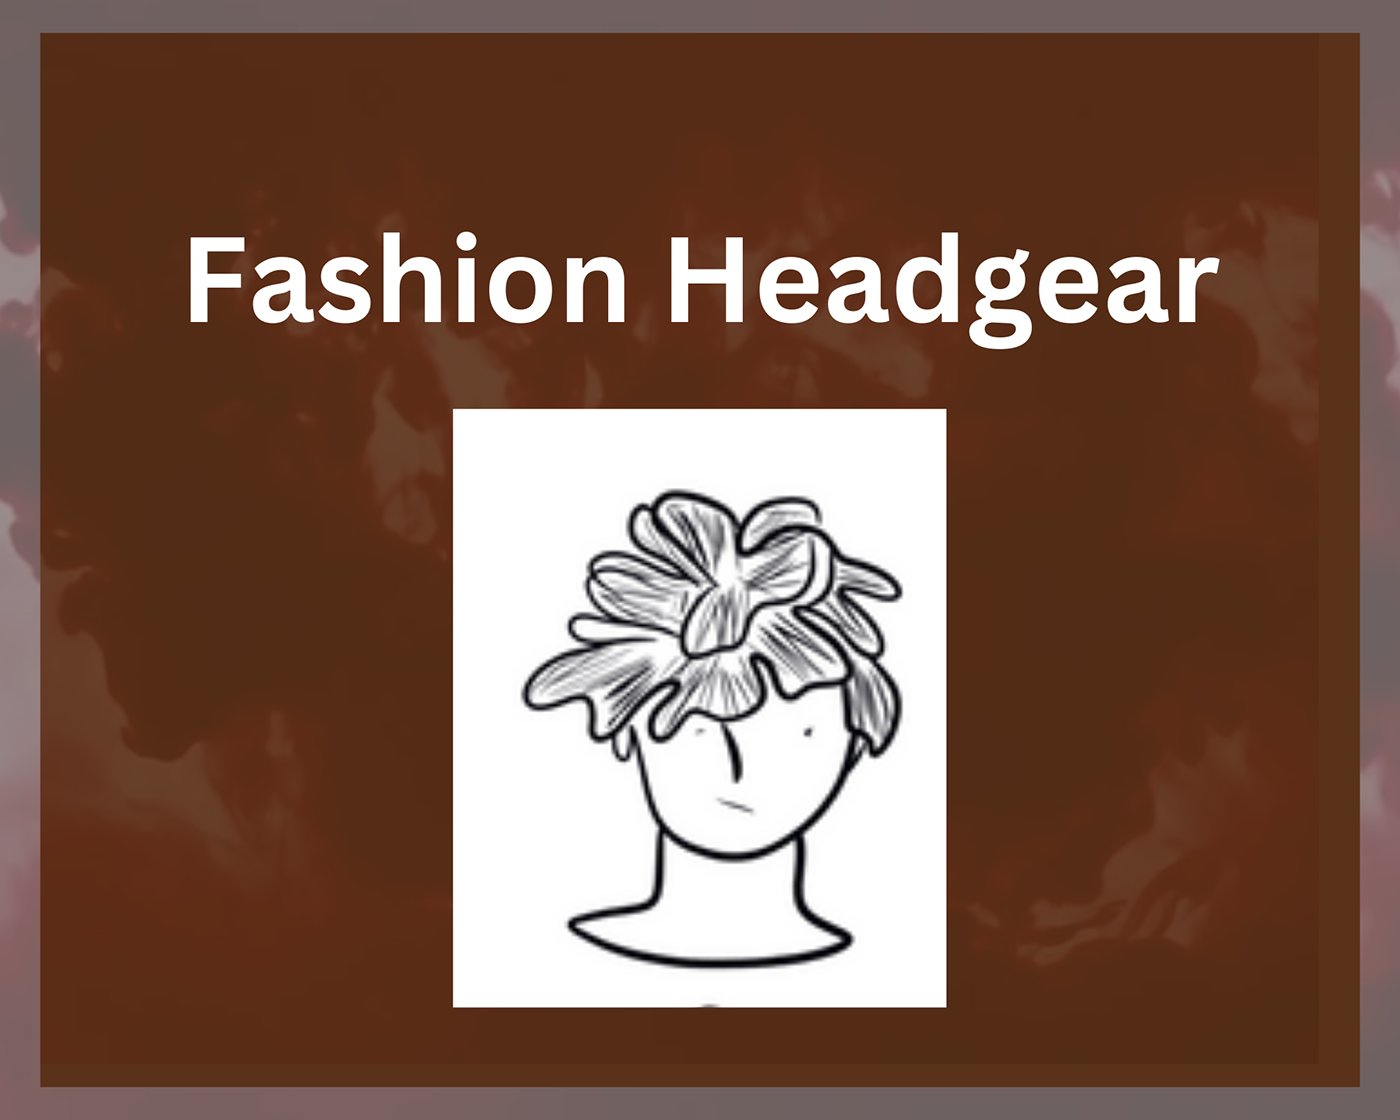 accessory design pattern making fashion headgear  headgear design